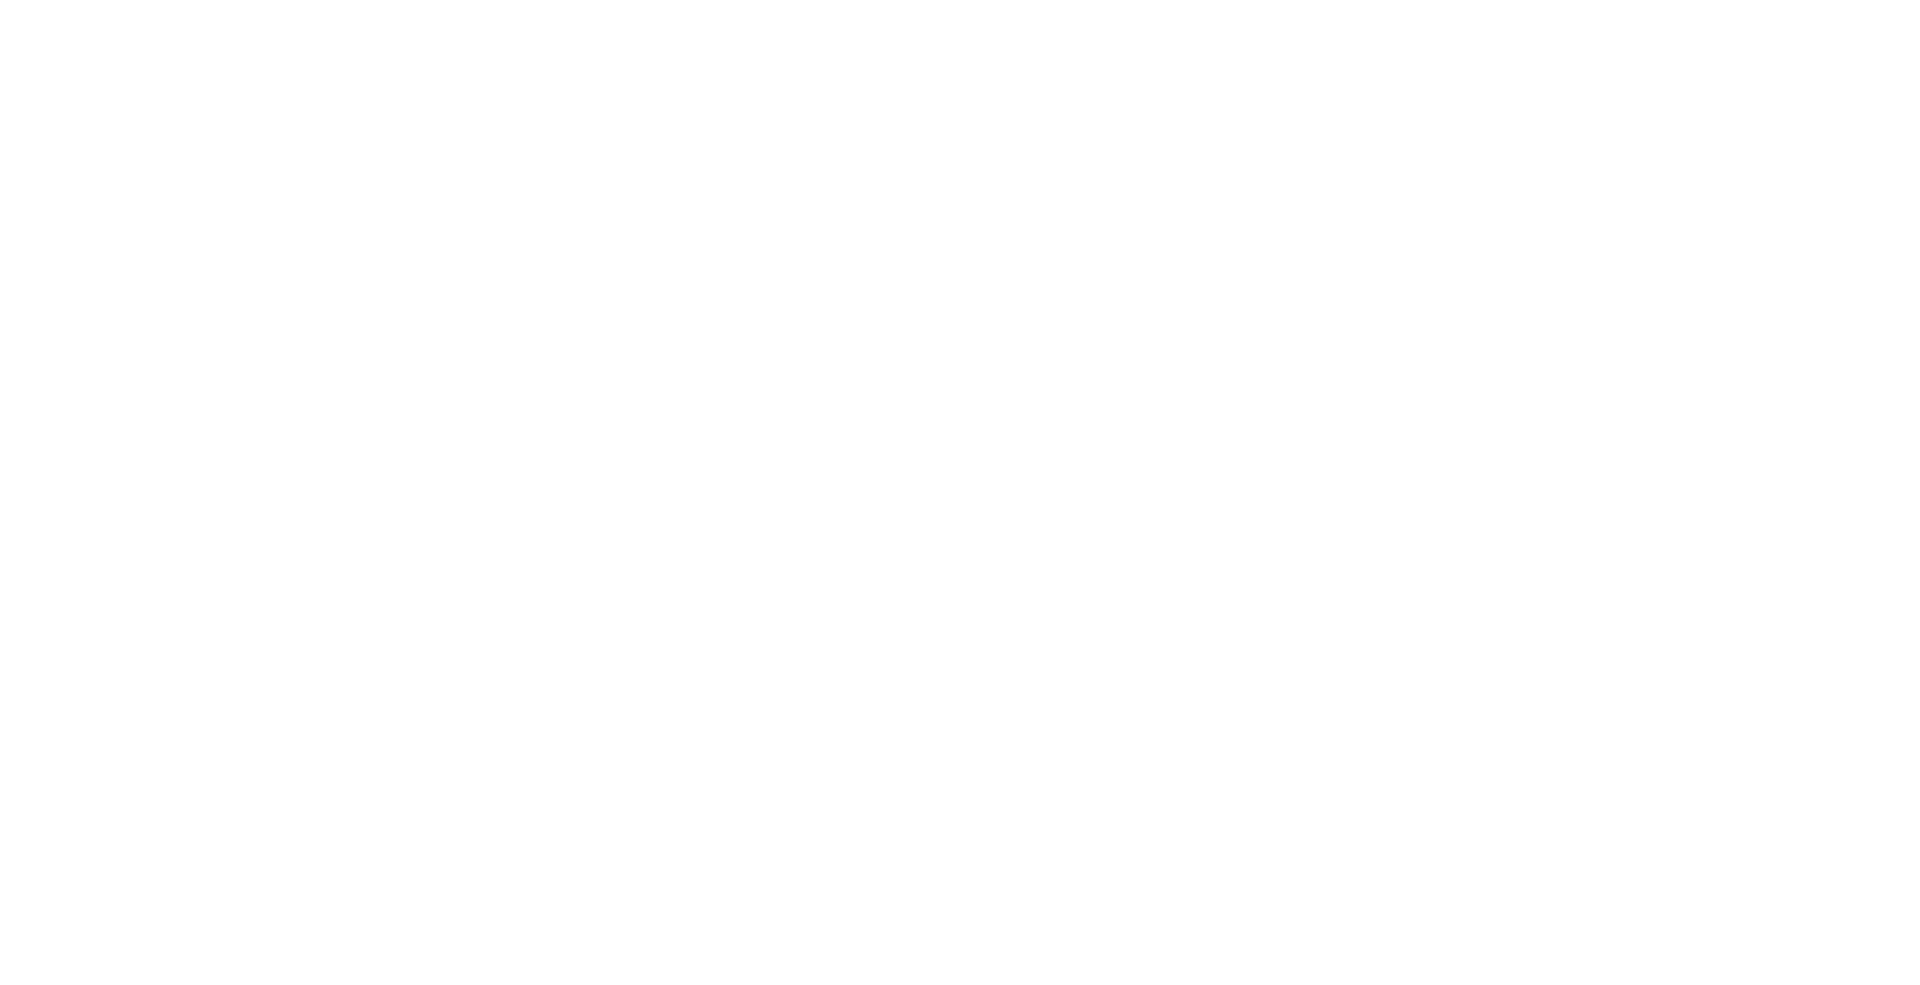 Phoenix Heart